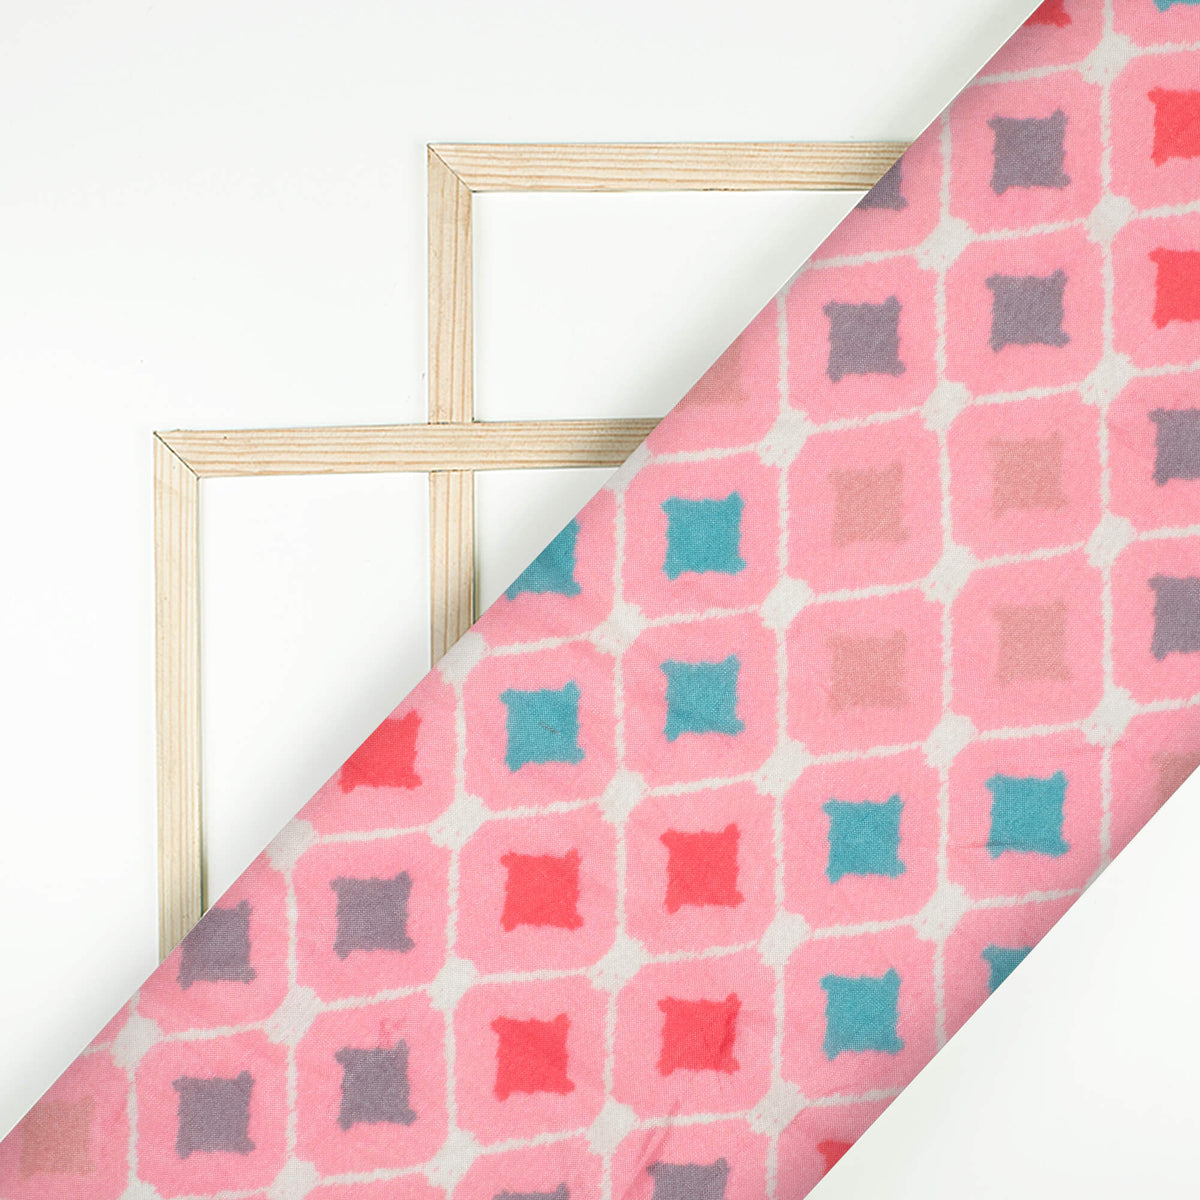 Taffy Pink And Grey Traditional Pattern Digital Print Viscose Muslin Fabric